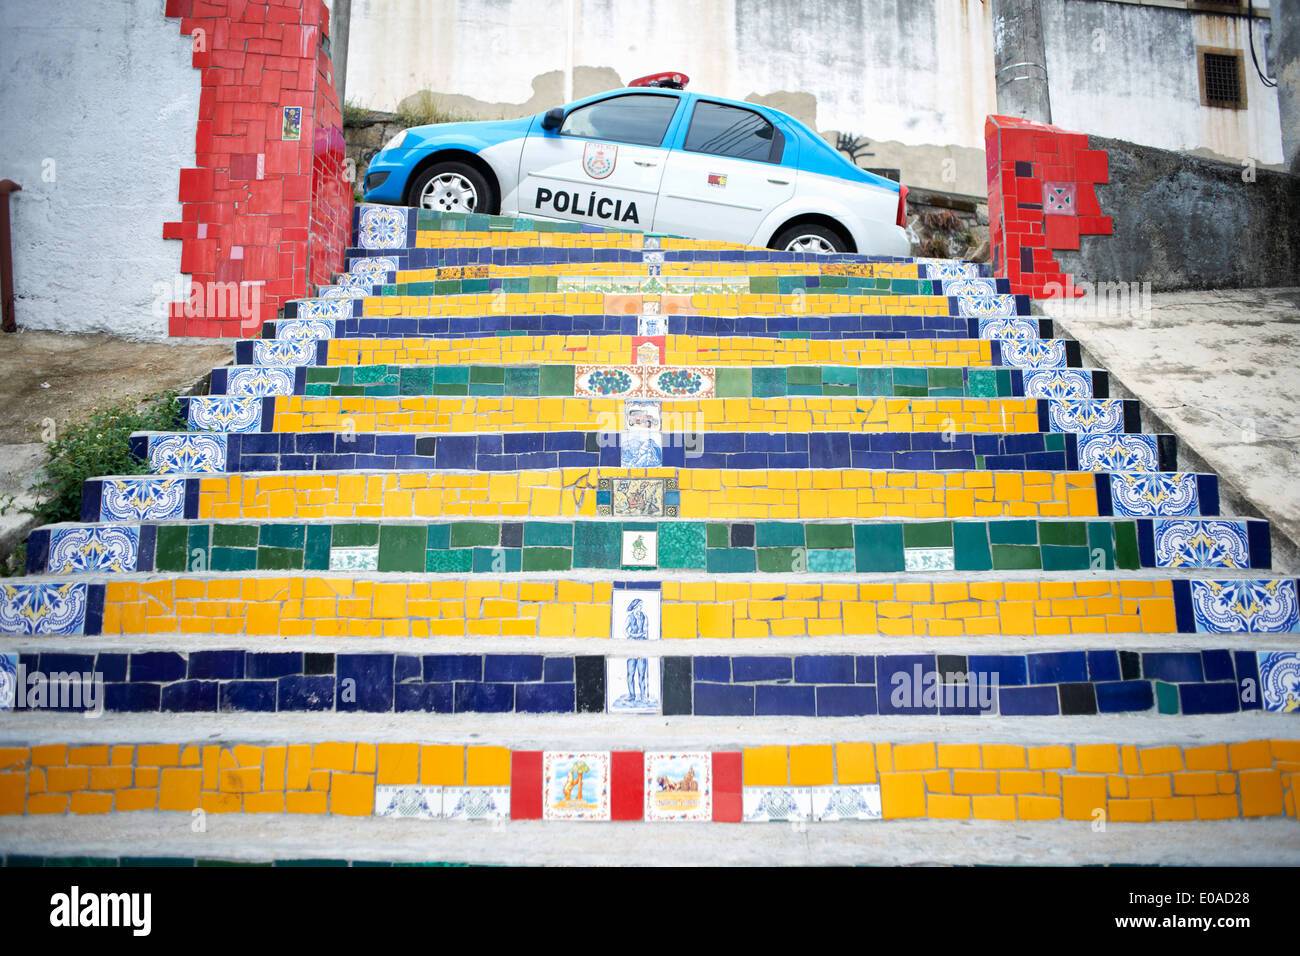 Escadaria Selaron und Polizei Auto, Rio De Janeiro, Brasilien Stockfoto